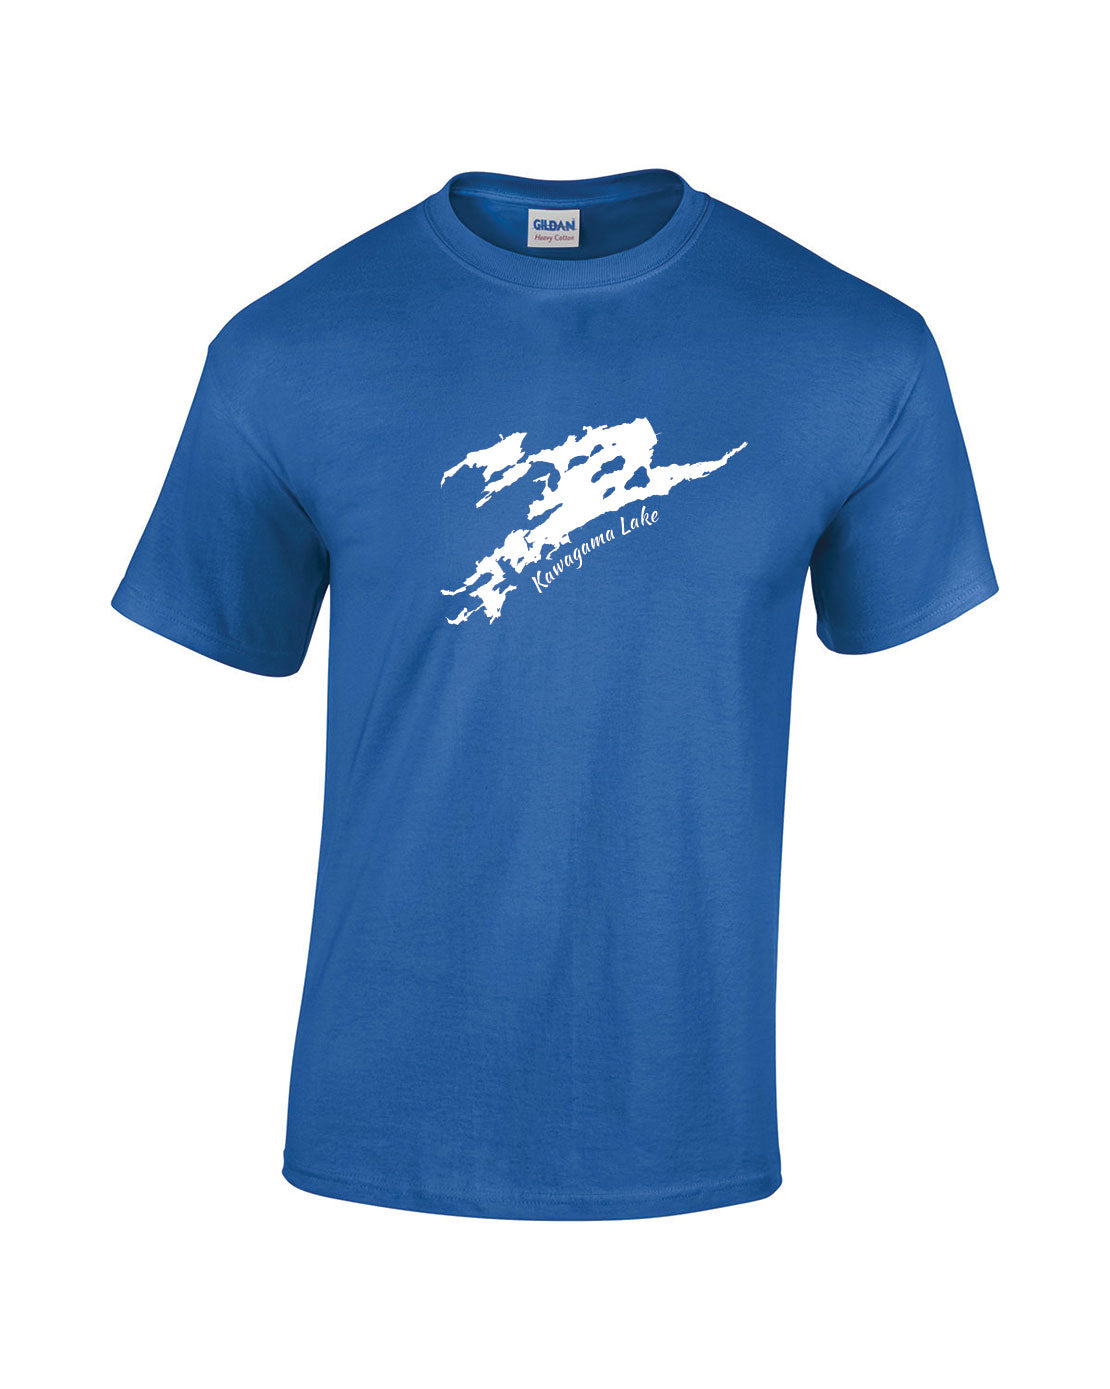 Kawagama Lake T-Shirt